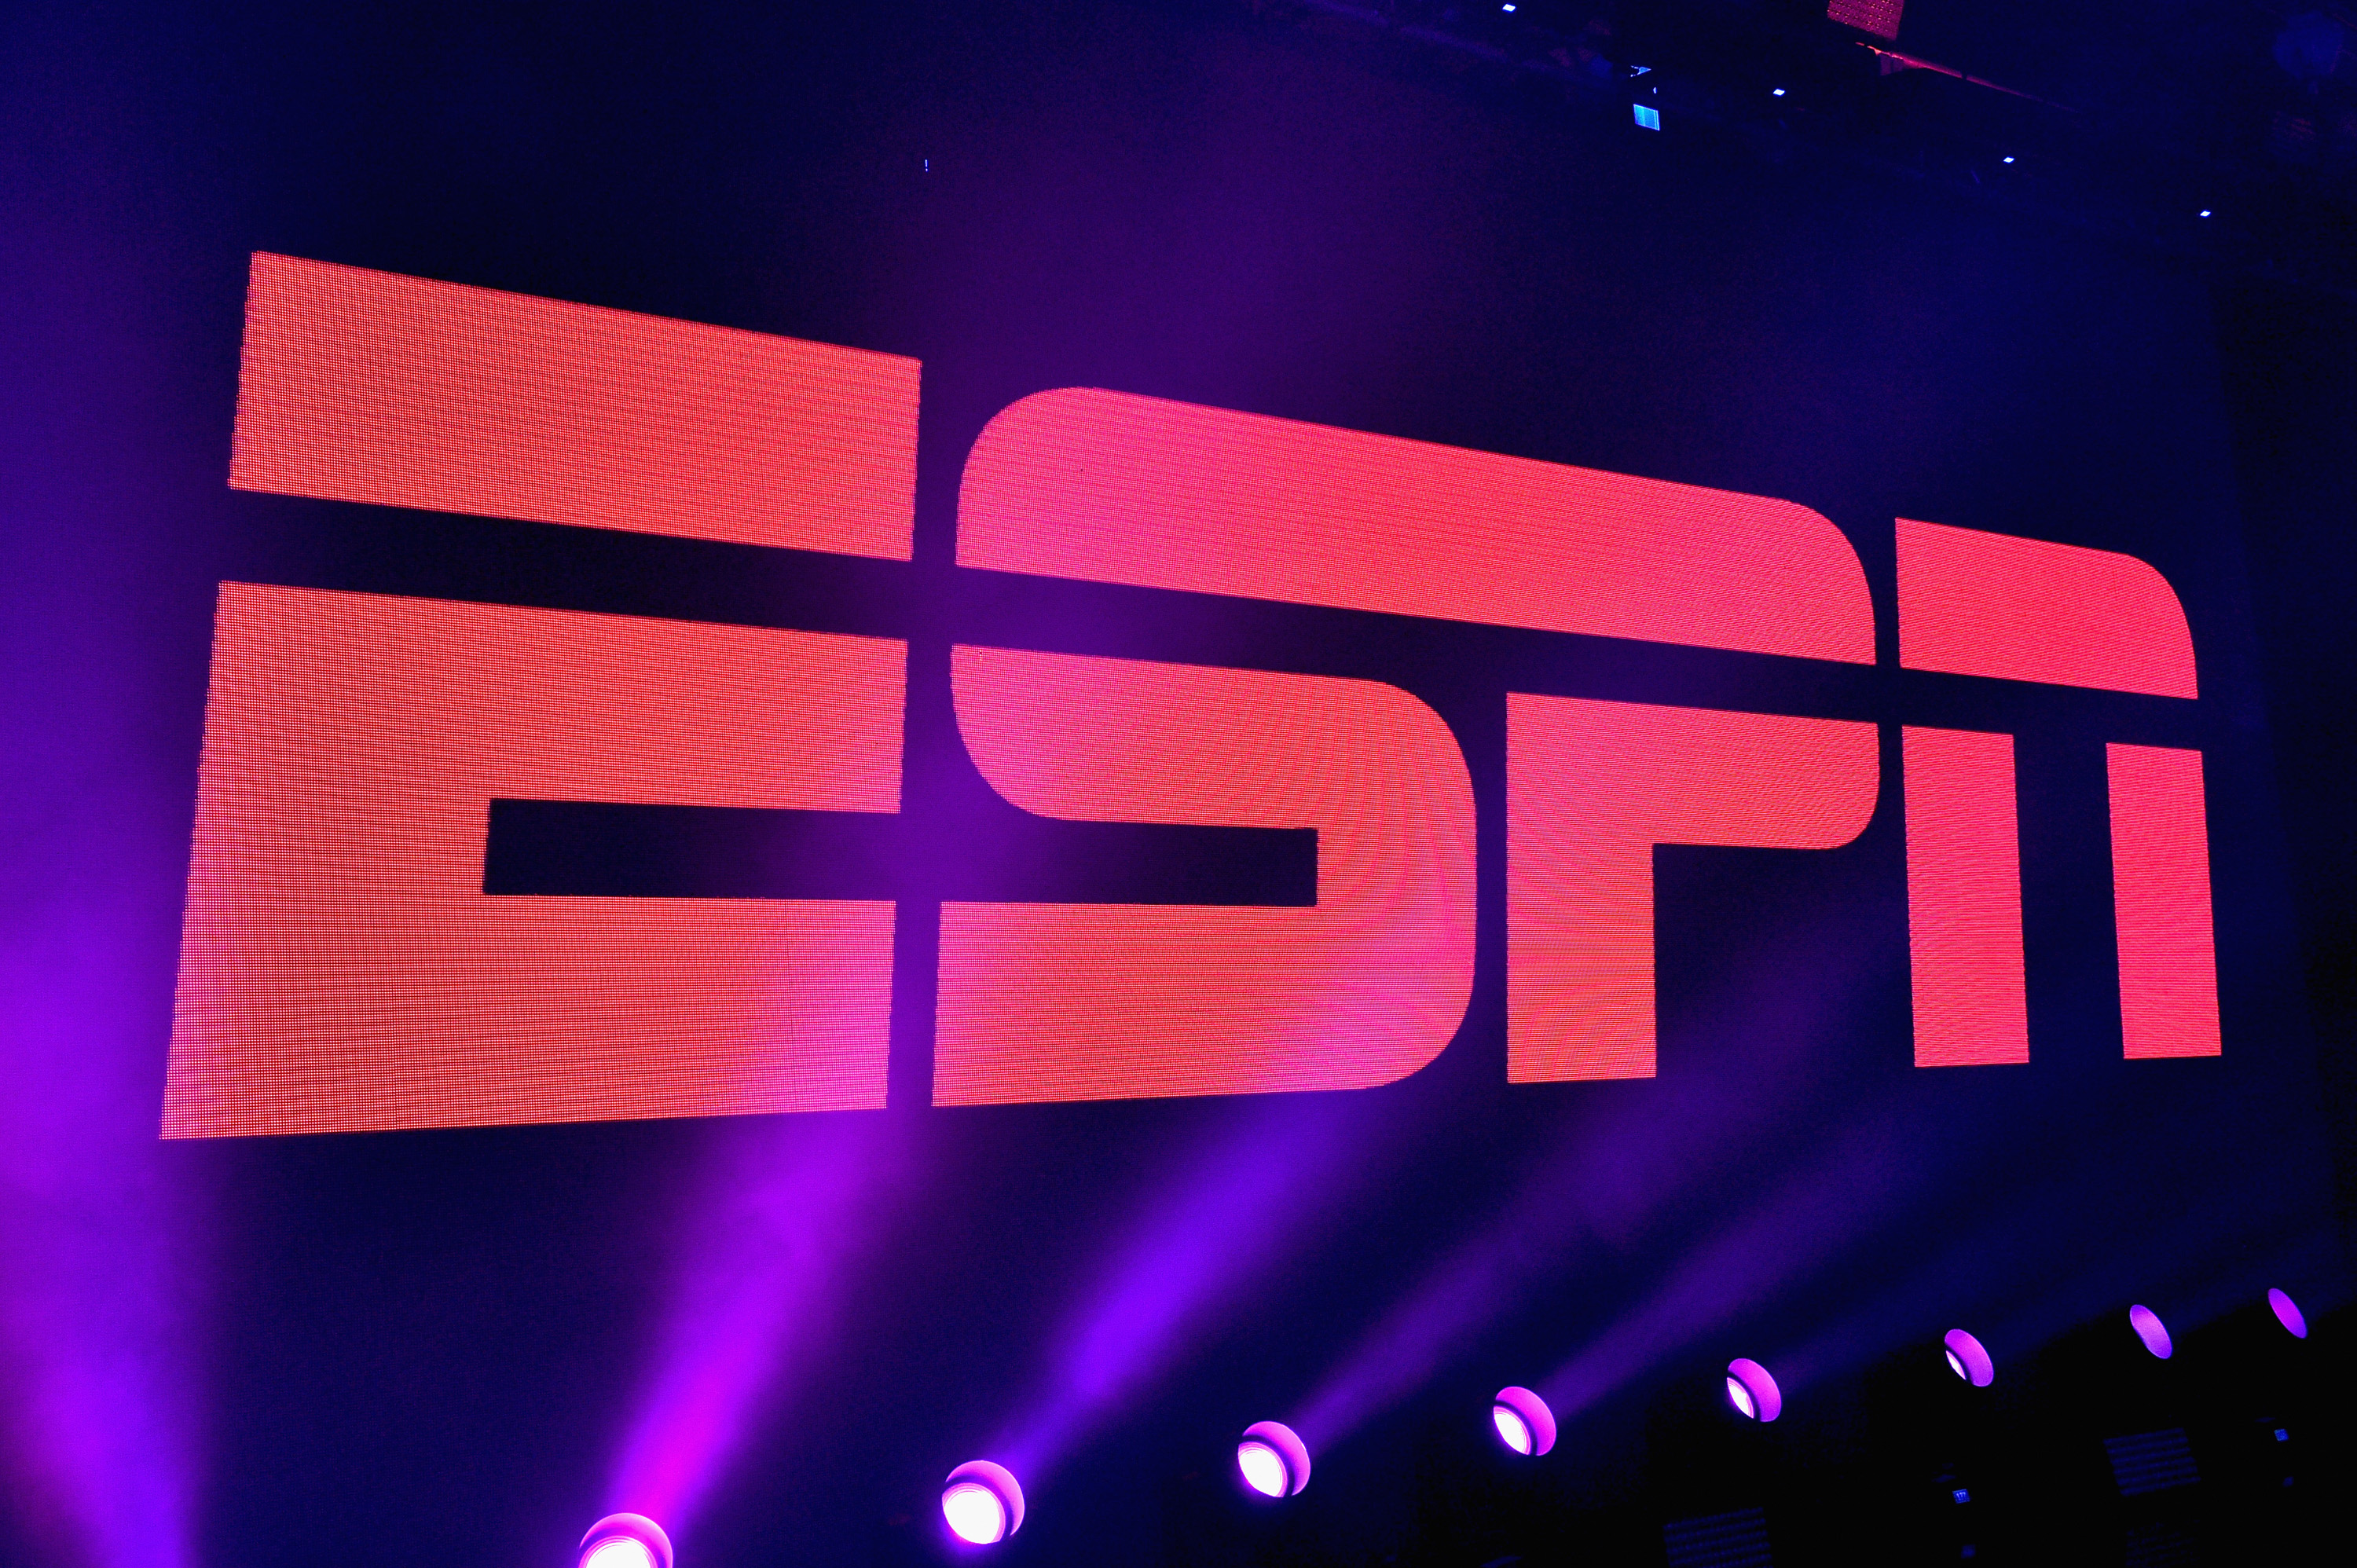 The ESPN logo in California